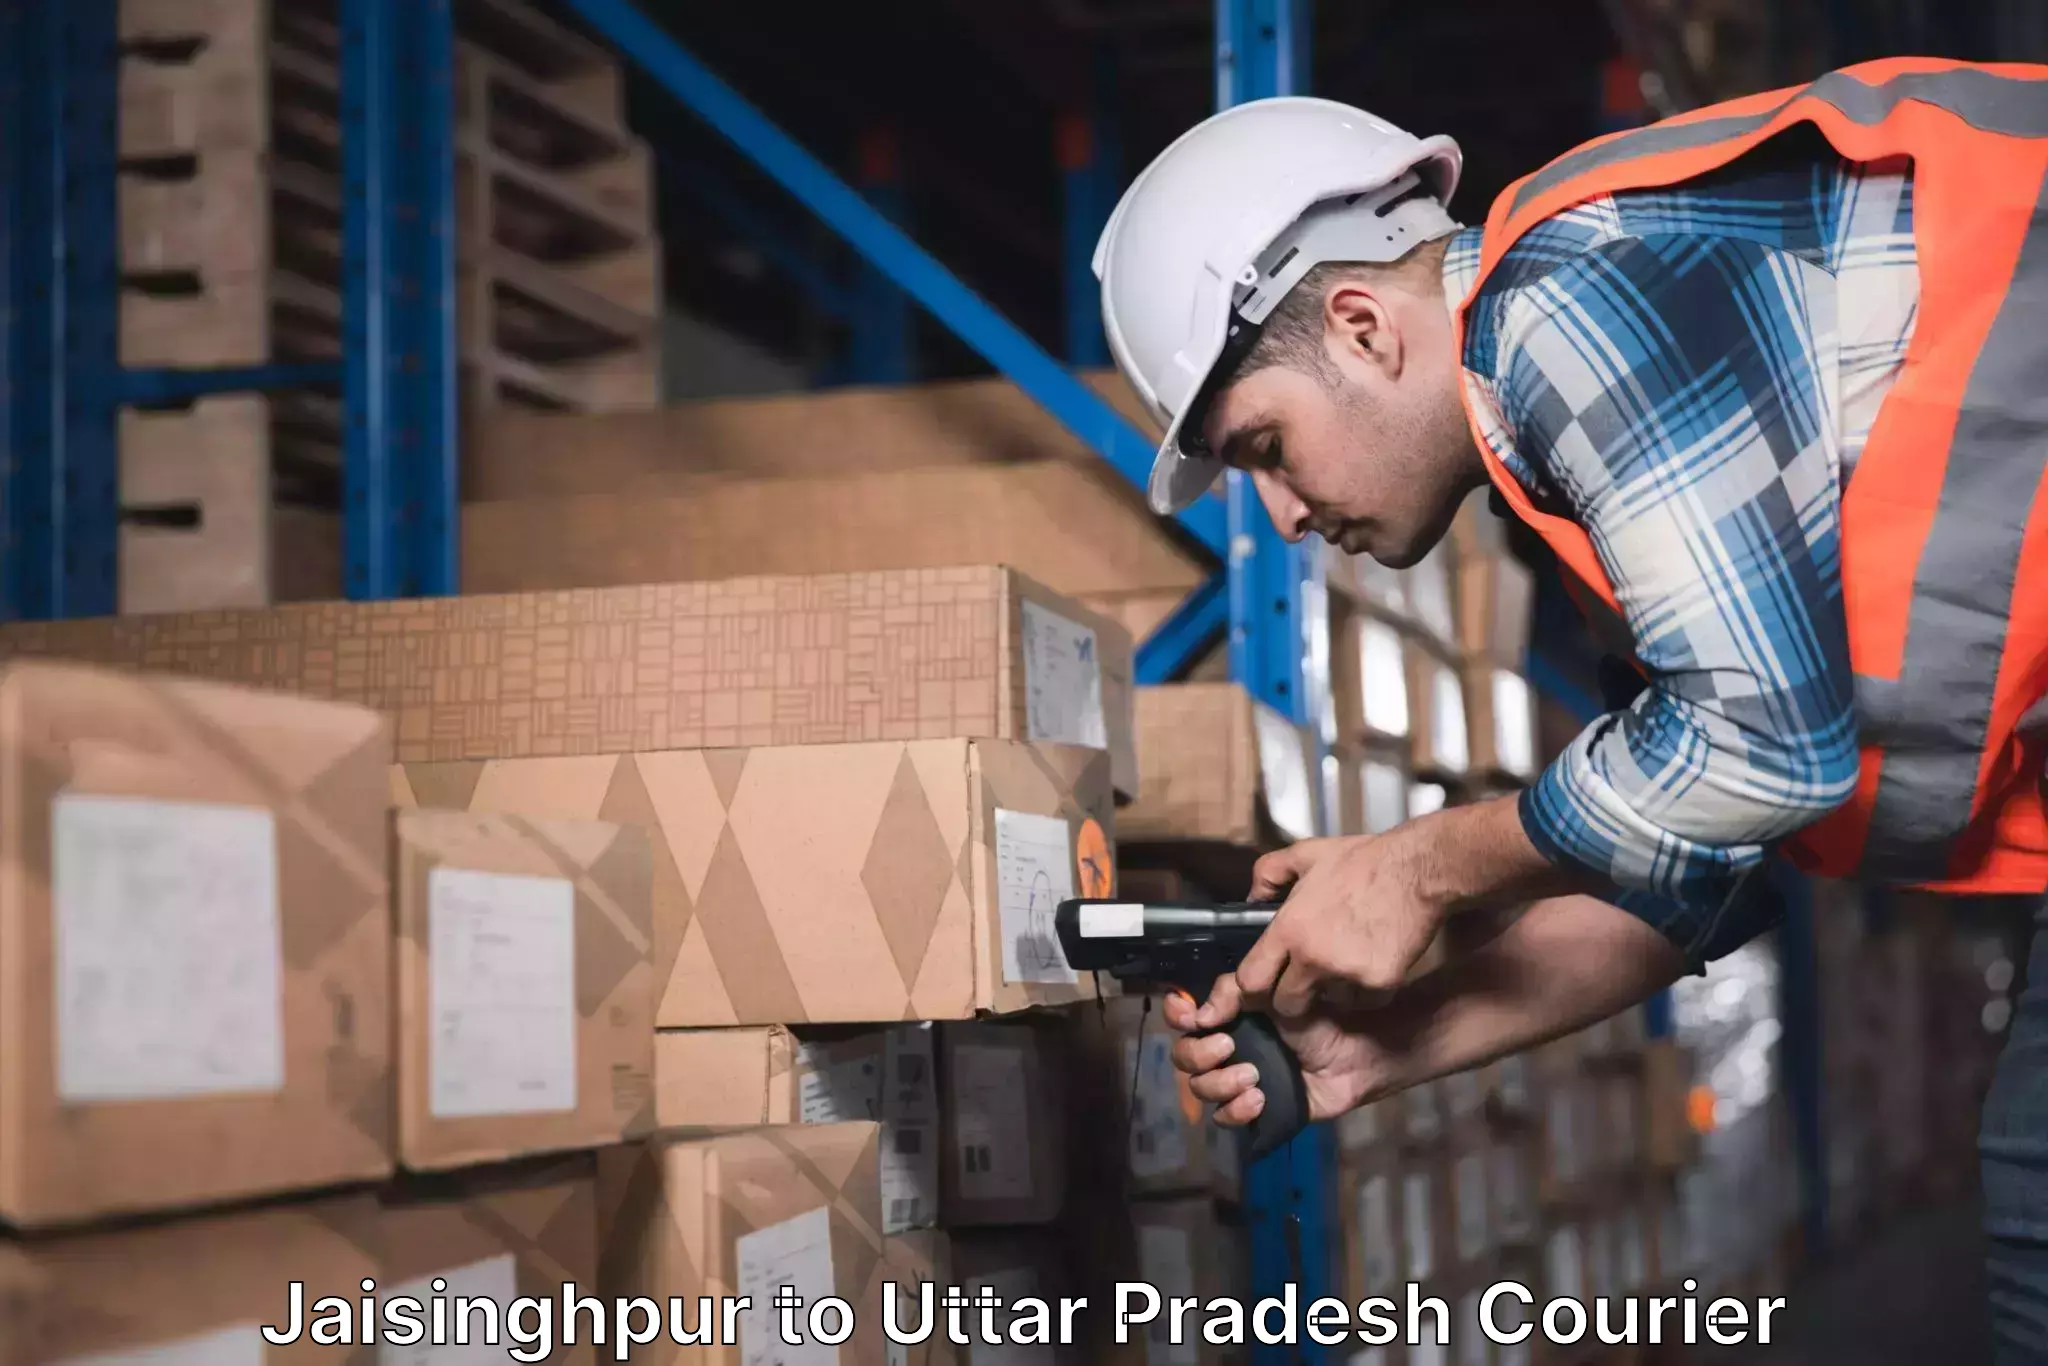 Customizable delivery plans in Jaisinghpur to Sarai Meer